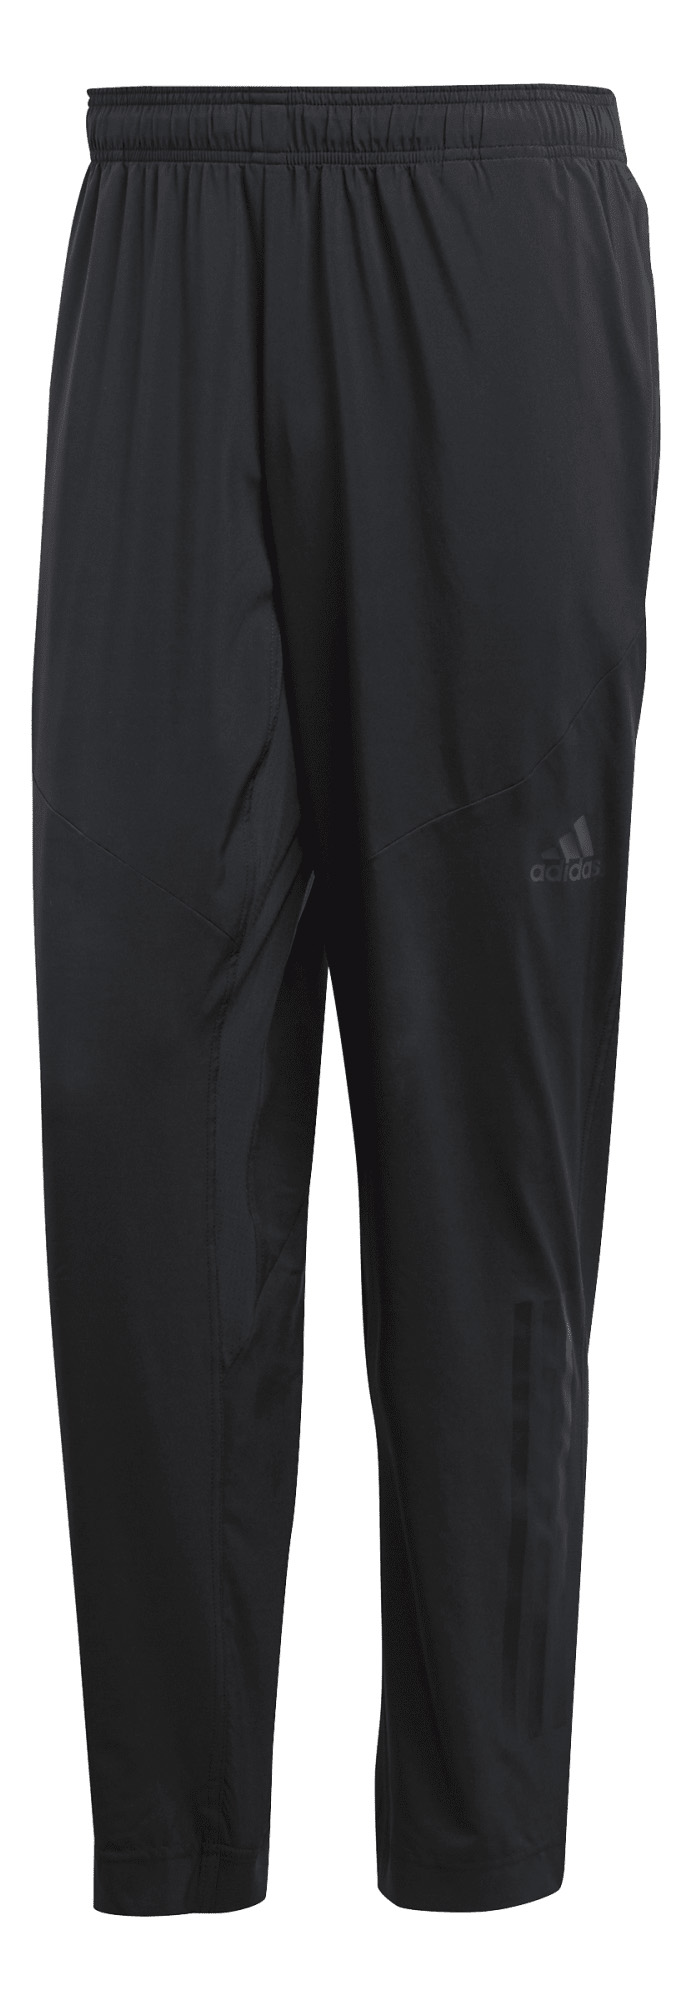 Hlače adidas Sportswear Workout Pant Climacool spodnie 506 S